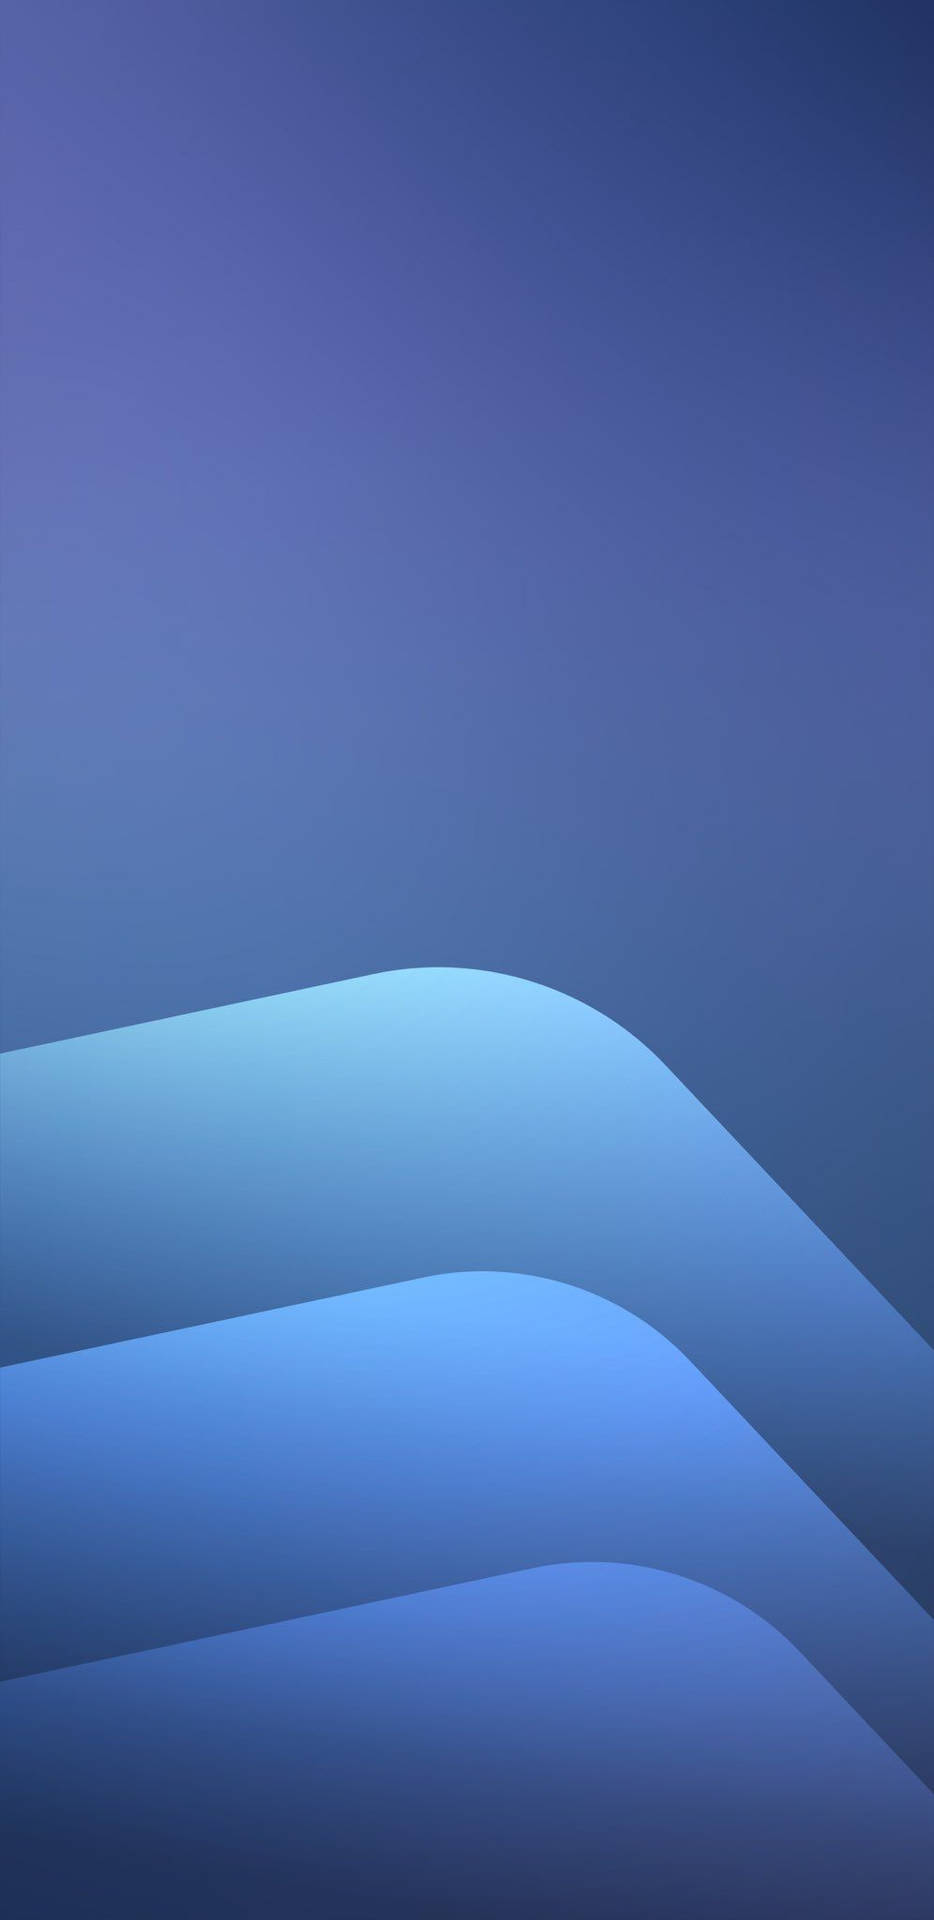 Triple Curve Blue Iphone Wallpaper